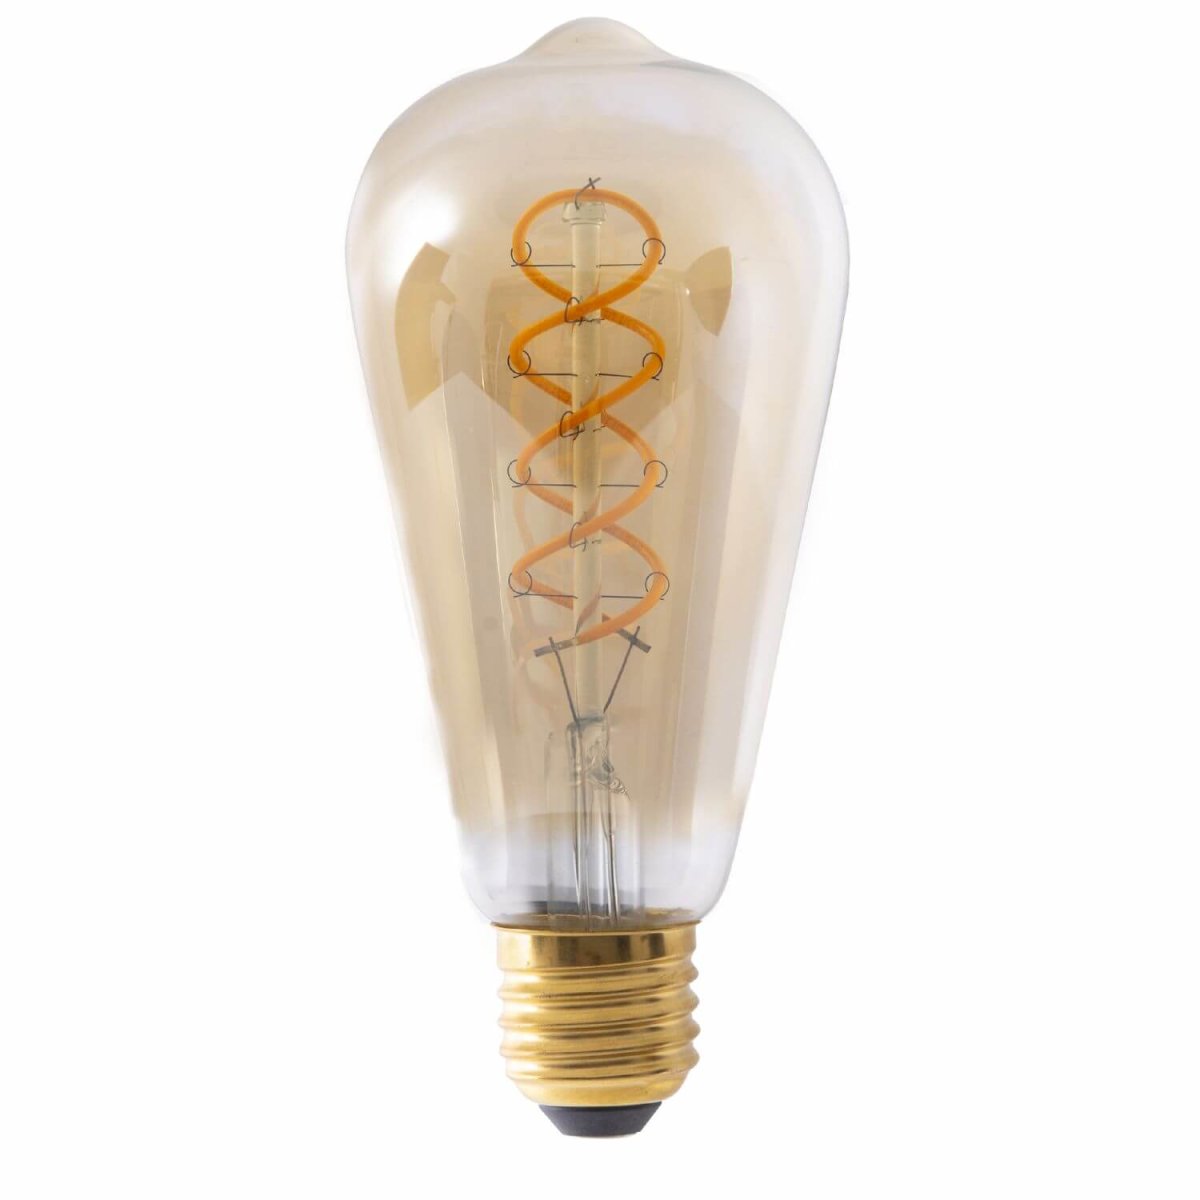 Näve 3er-Set DILLY 4135 Warmweiss Leuchtmittel amber LED 5W 6,4x6,4cm